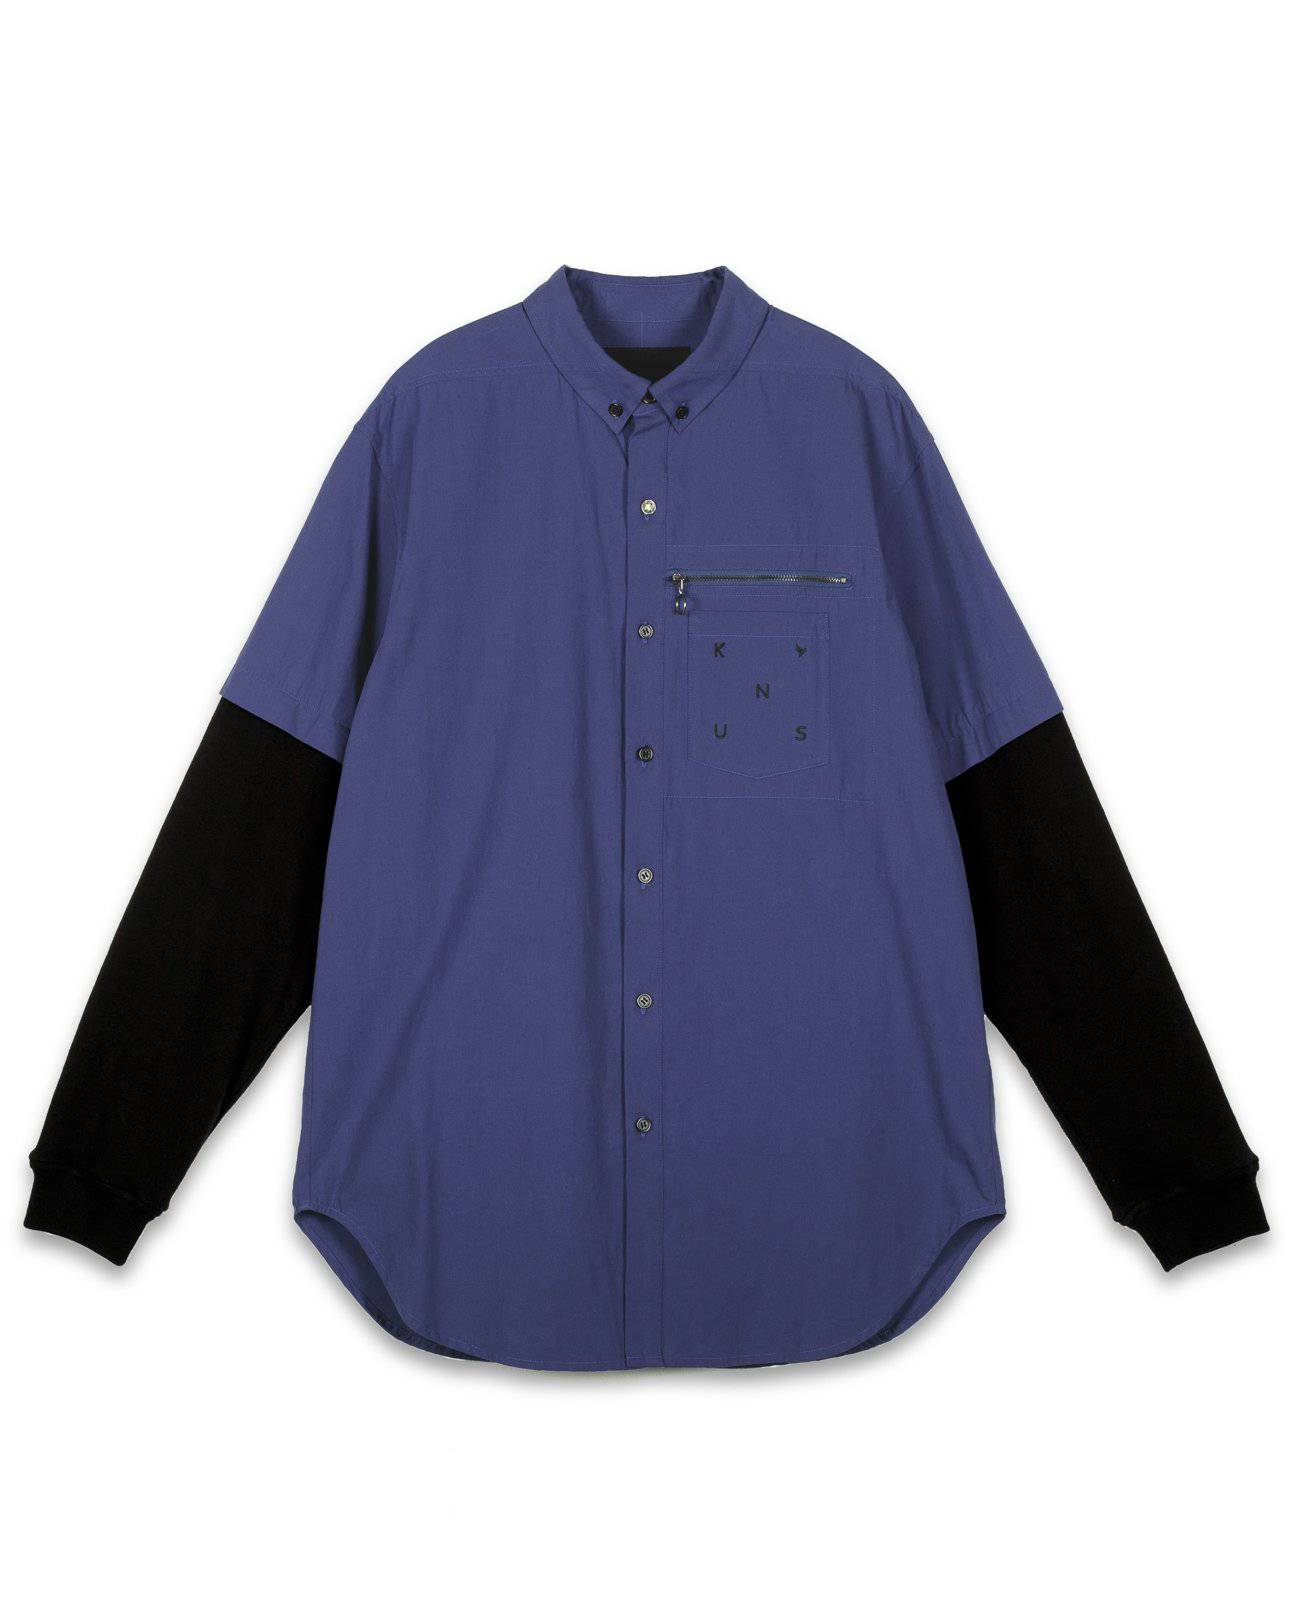 Men's 2 Layer Shirt in Deep Cobalt by Shop at Konus